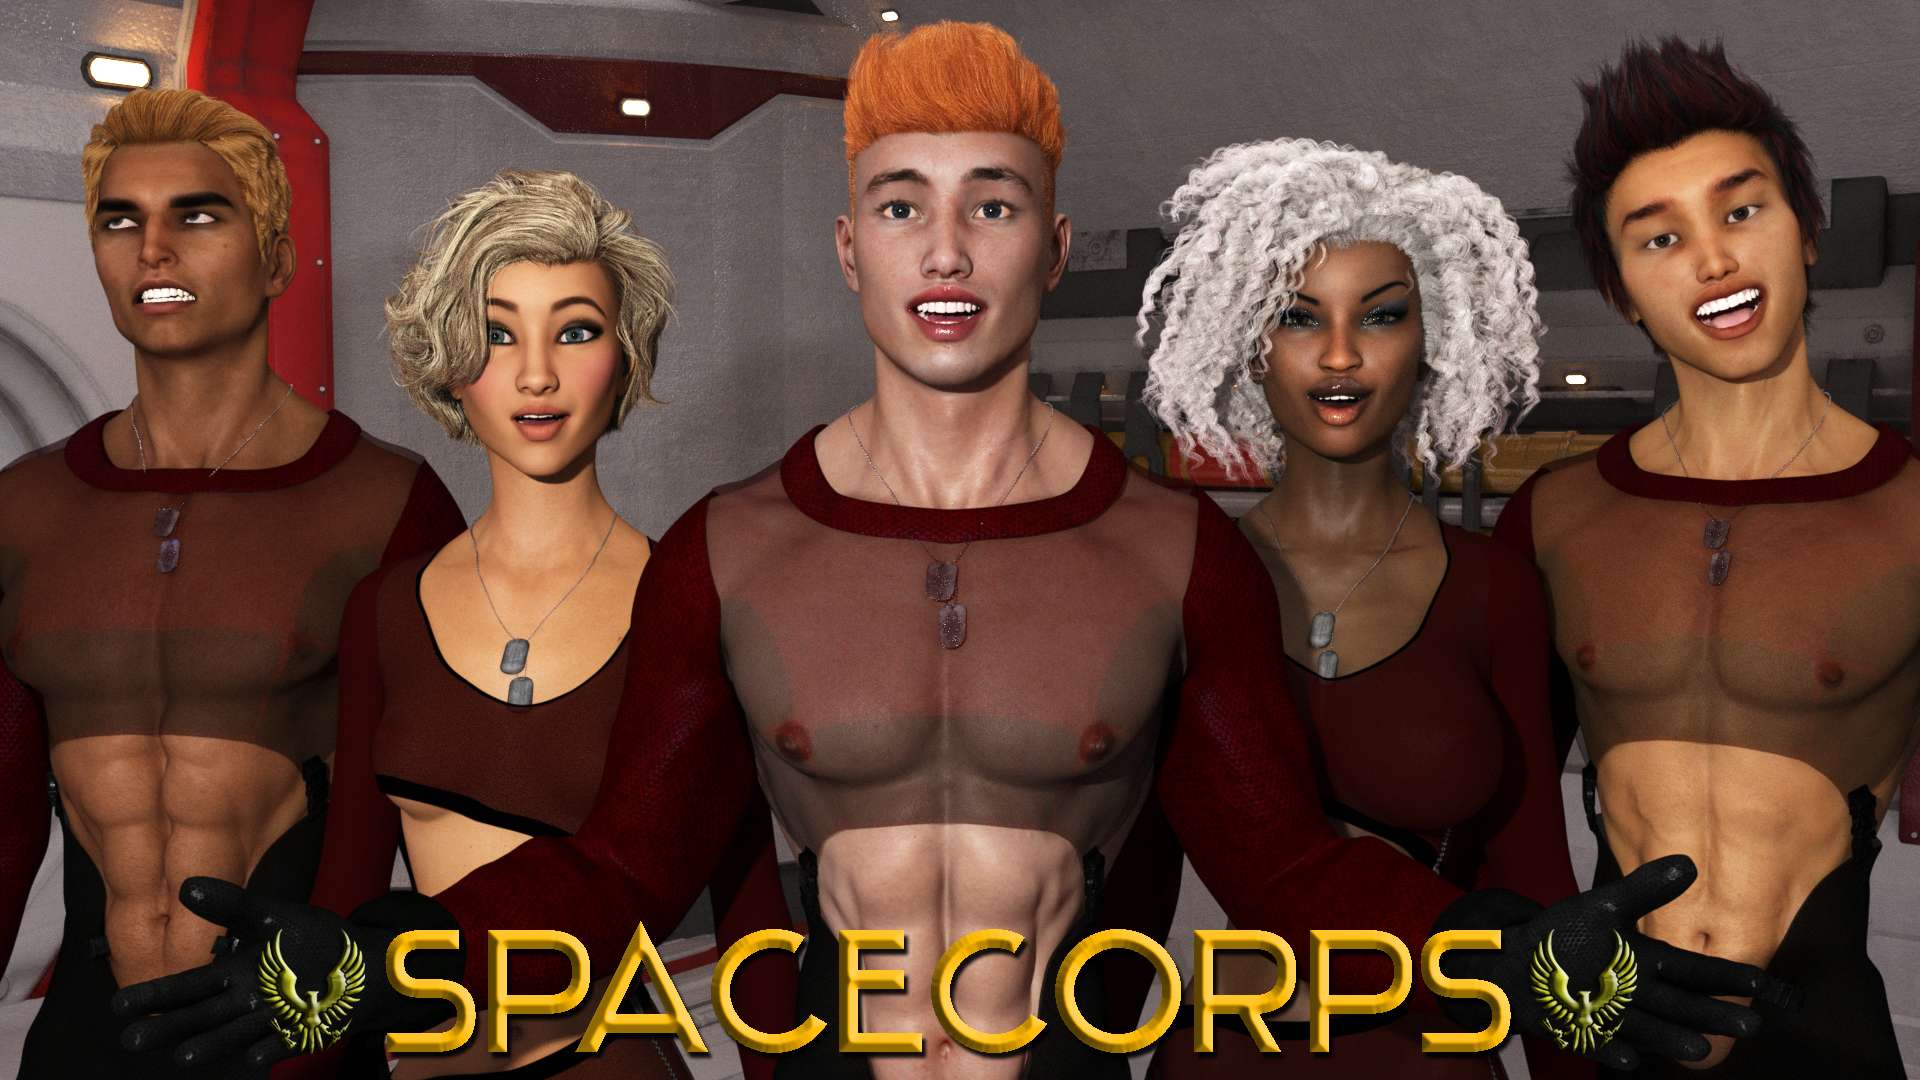 Www Xxs Com Download - Ren'Py] SpaceCorps XXX - vS2 v2.5.5 by RanliLabz 18+ Adult xxx Porn Game  Download